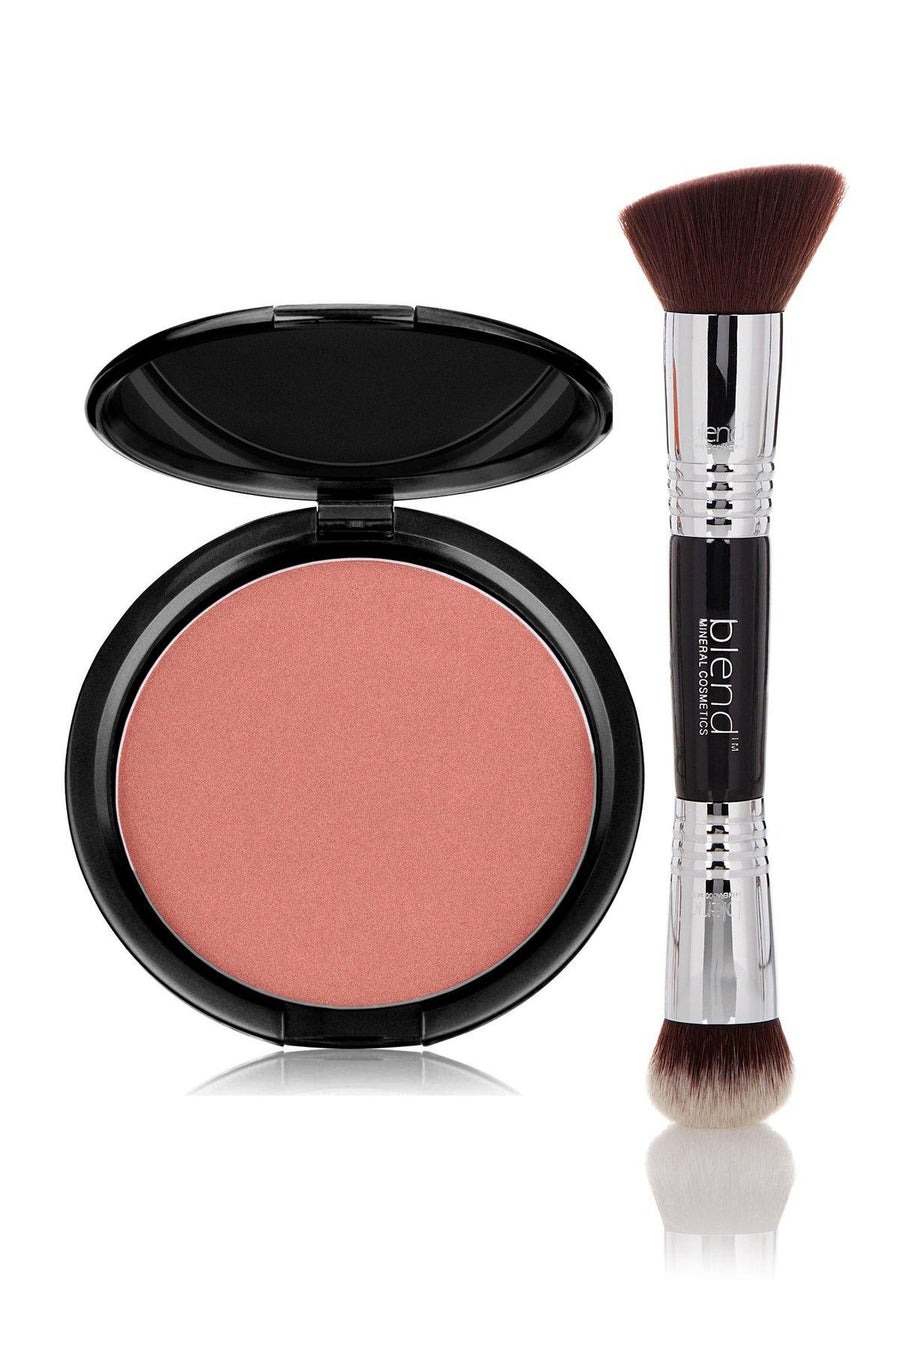 Blush Mineral Pressed Powder & Brush Set - Pink Brown Tone - Blend Mineral Cosmetics